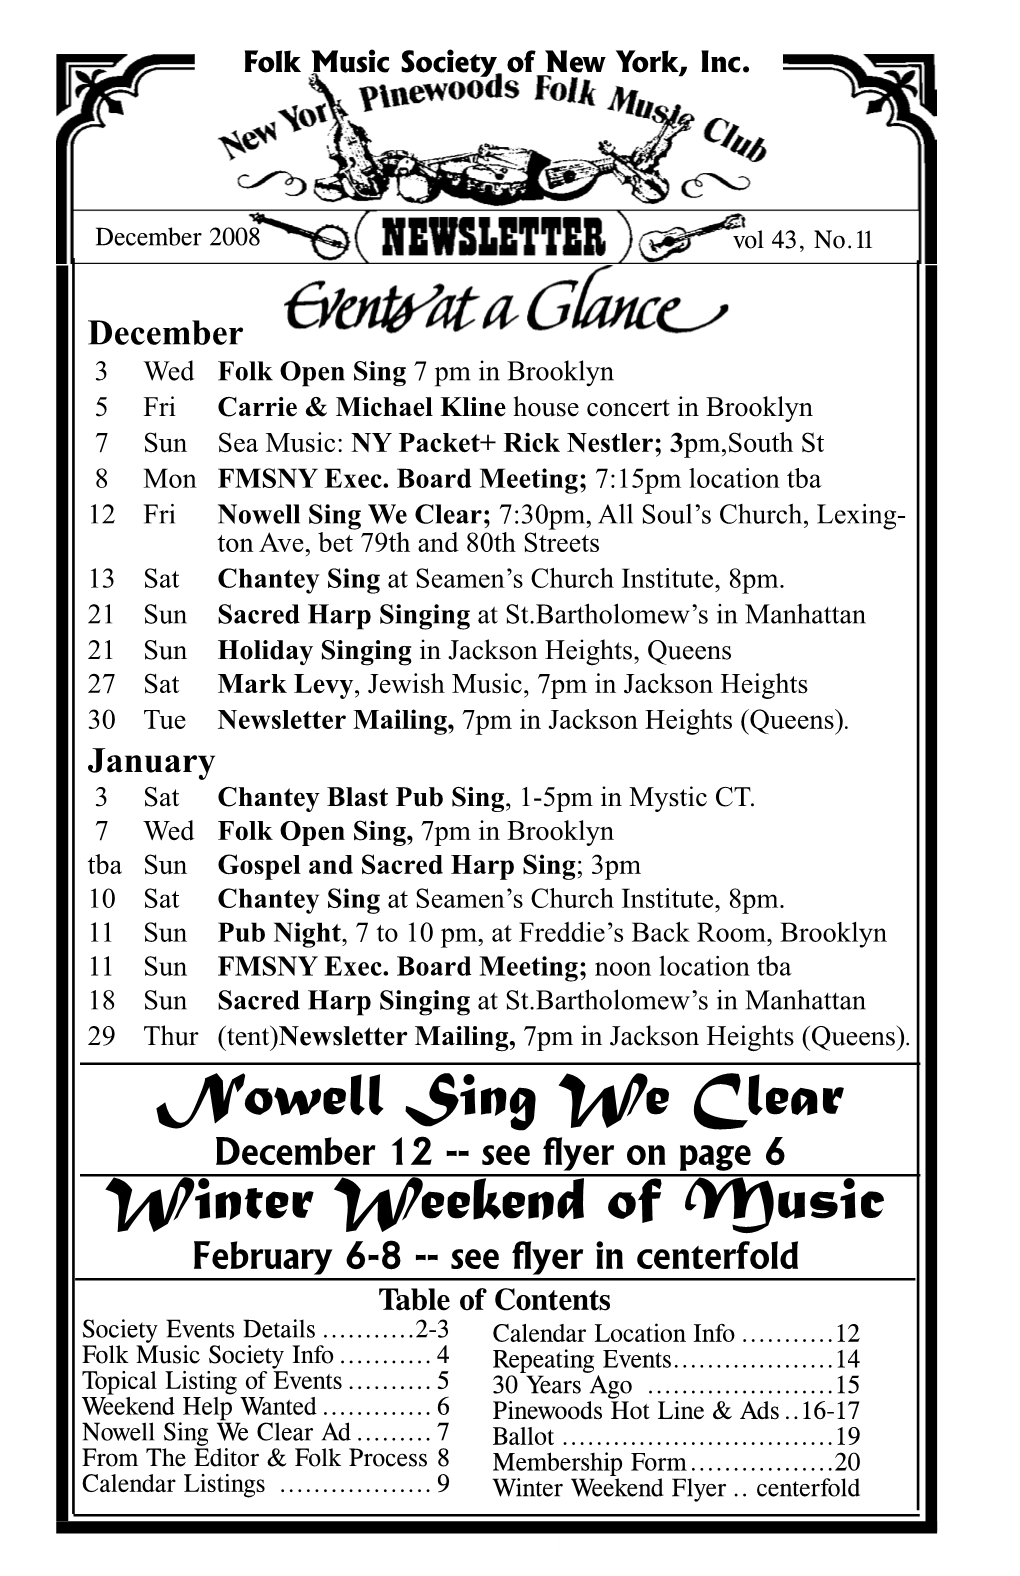 Nowell Sing We Clear Winter Weekend of Music